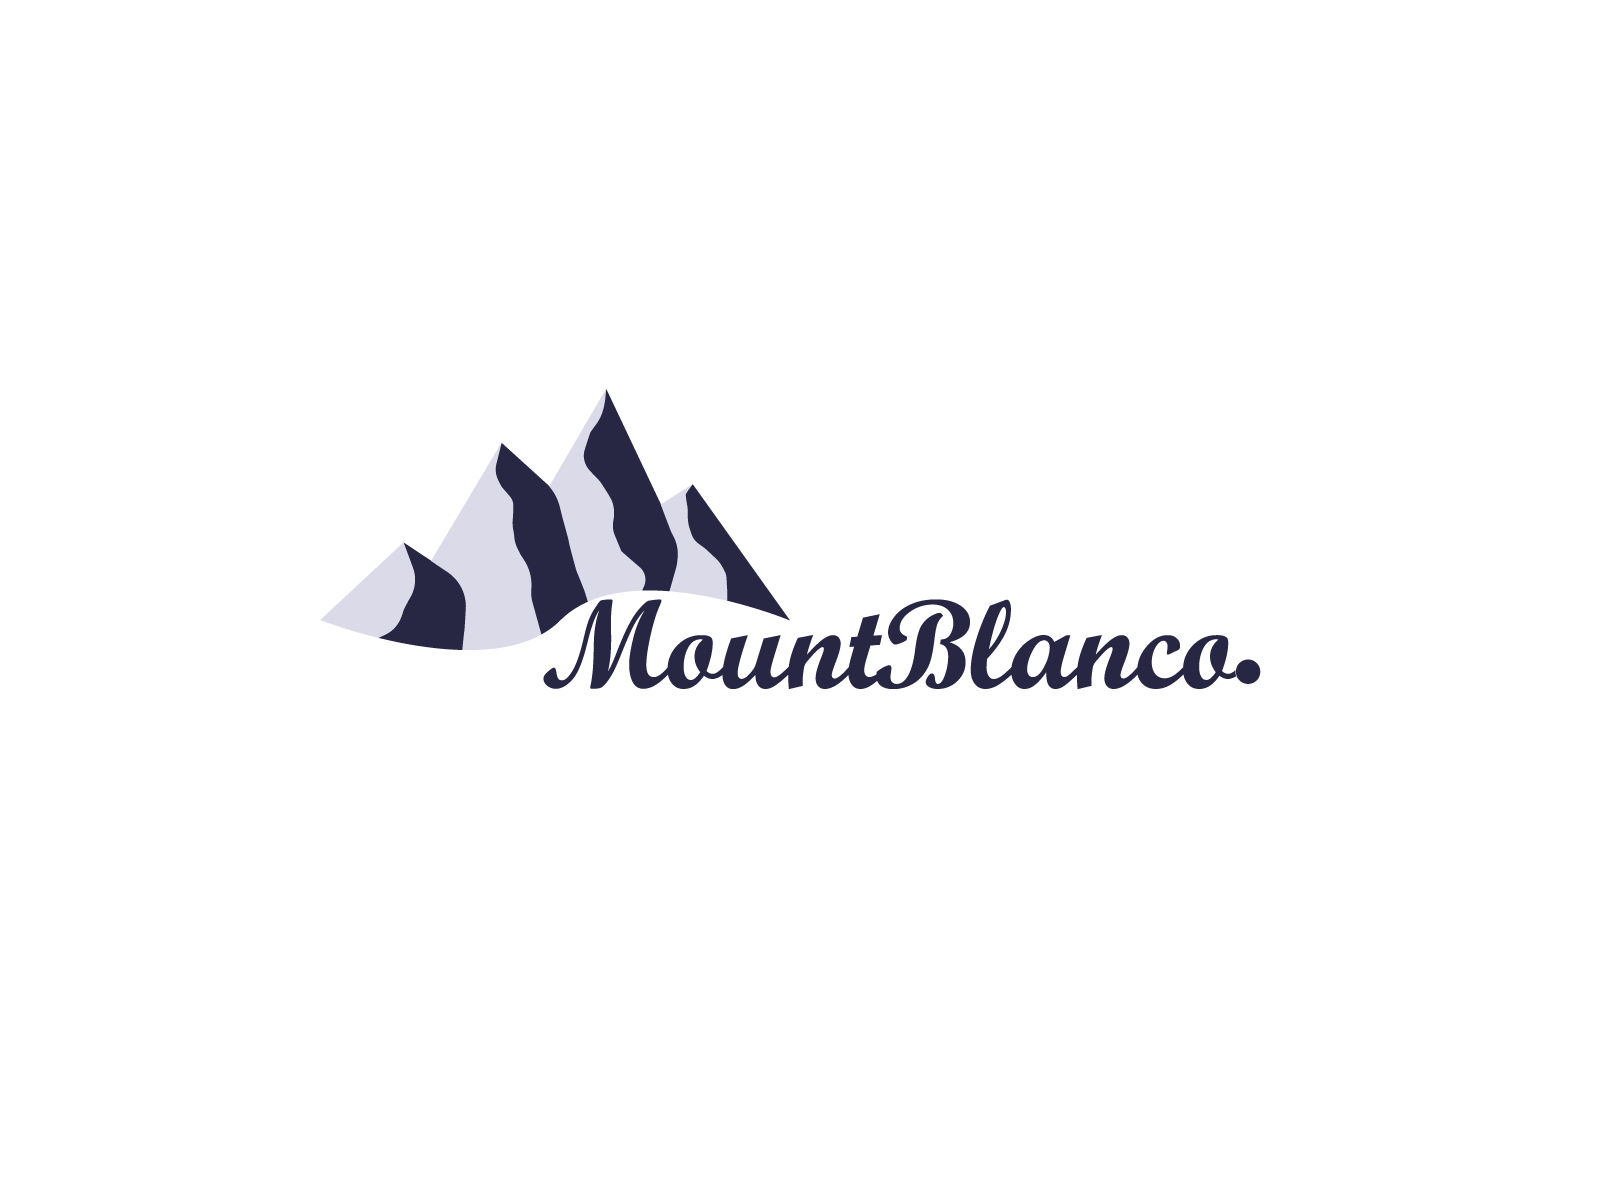 MountBlanco Logo by Mateusz Gurycz on Dribbble